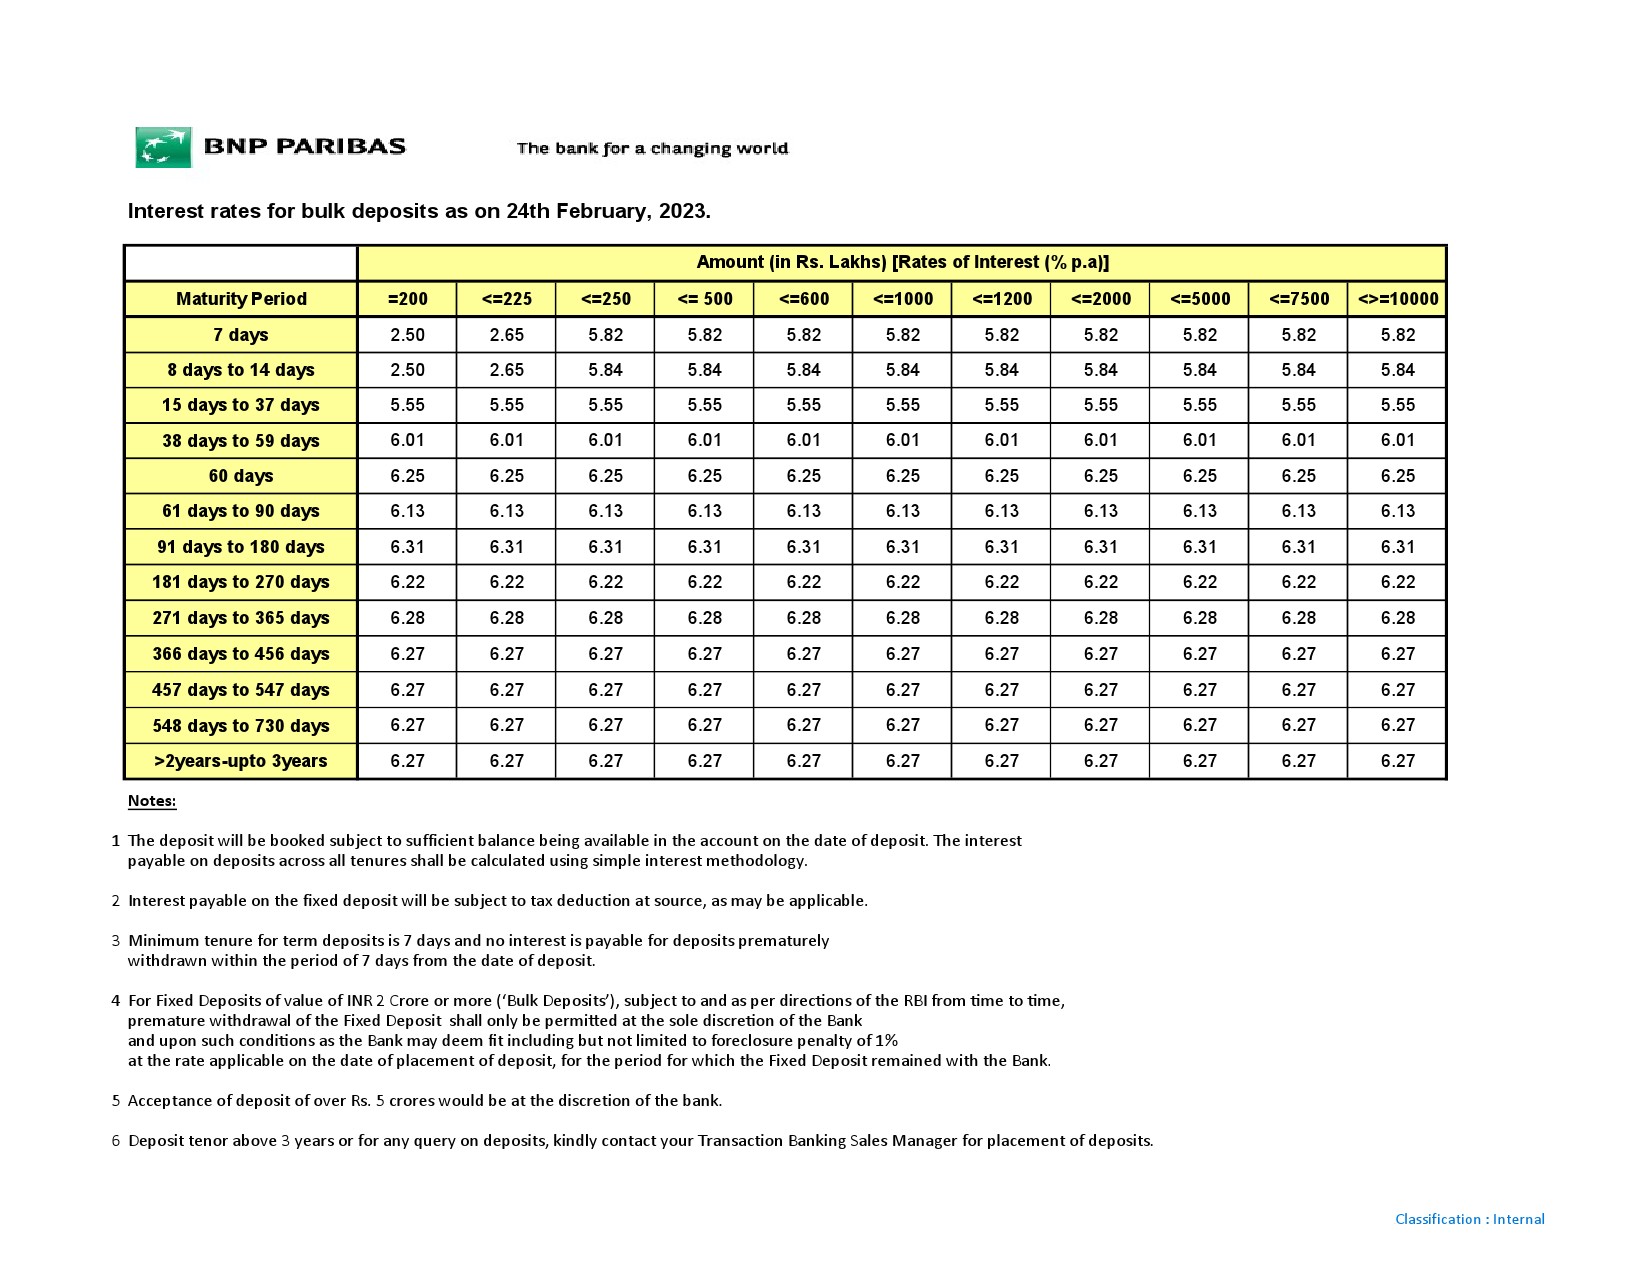 Fixed Deposit Interest Rates of BNP Paribas - Image 1